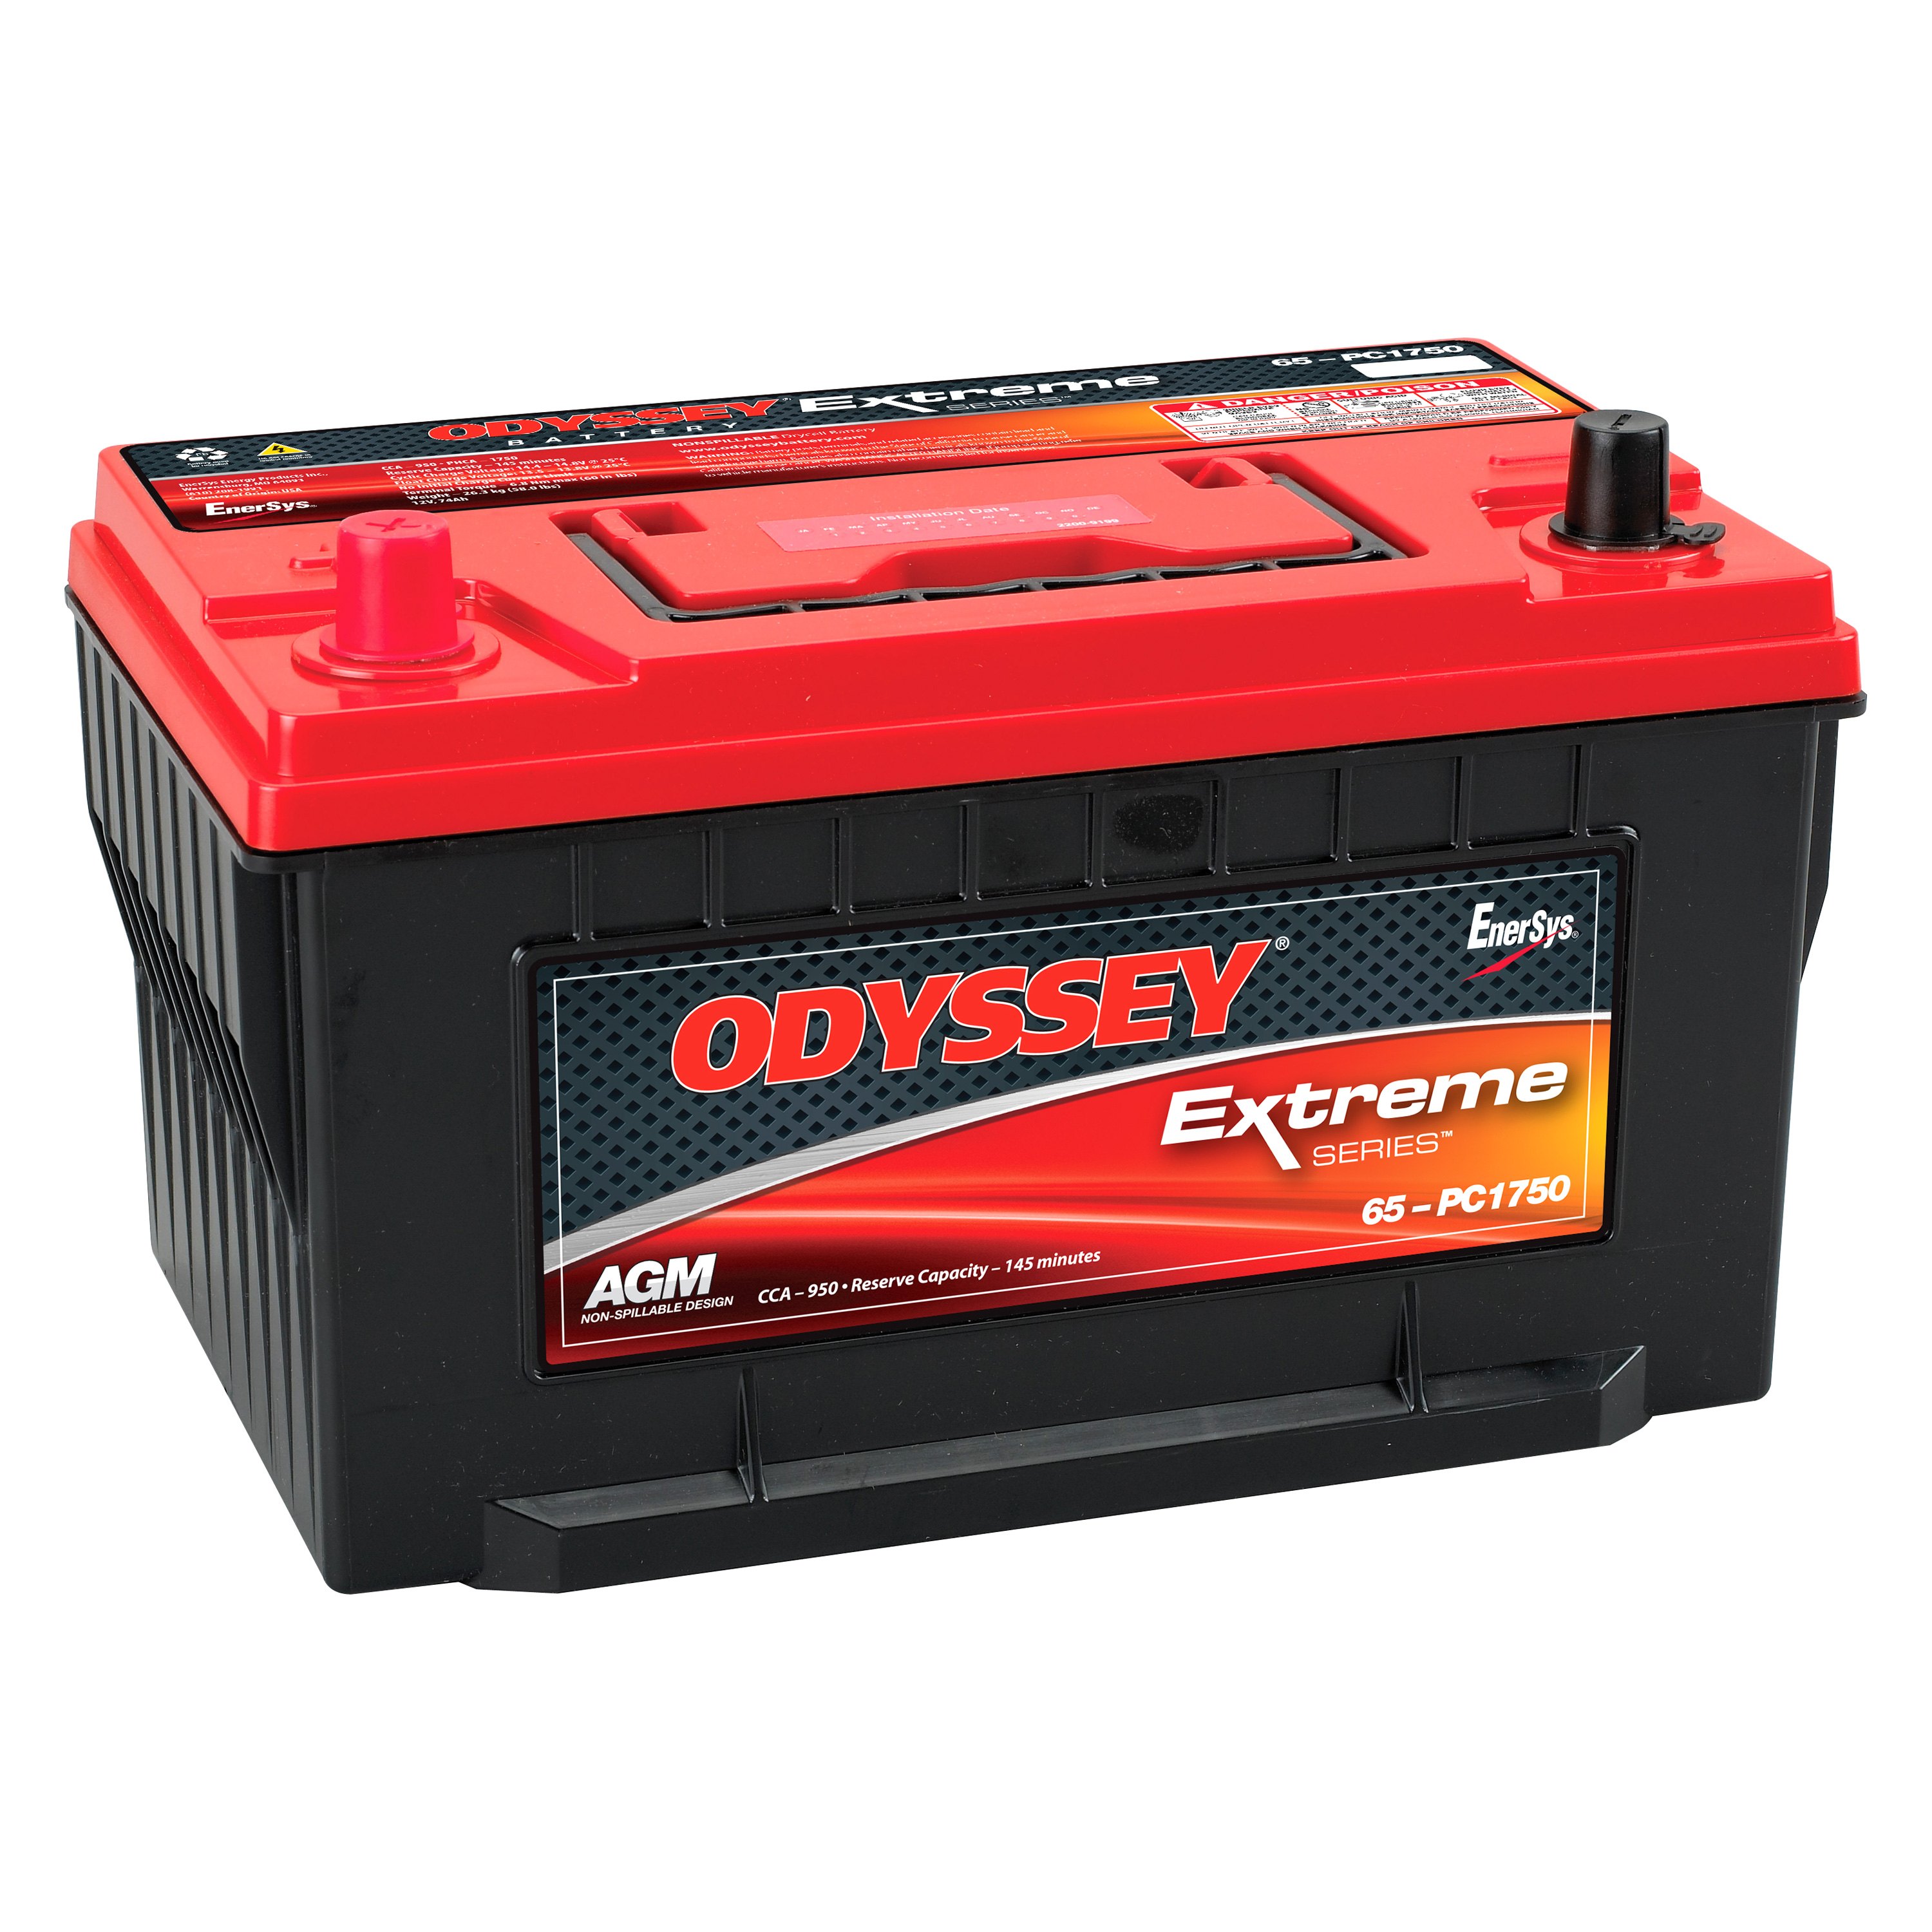 Batteries купить. Odyssey Battery extreme аккумуляторы pc950. Аккумулятор Odyssey 49-950. Аккумулятор Odyssey 94. Аккумулятор Odyssey 48.